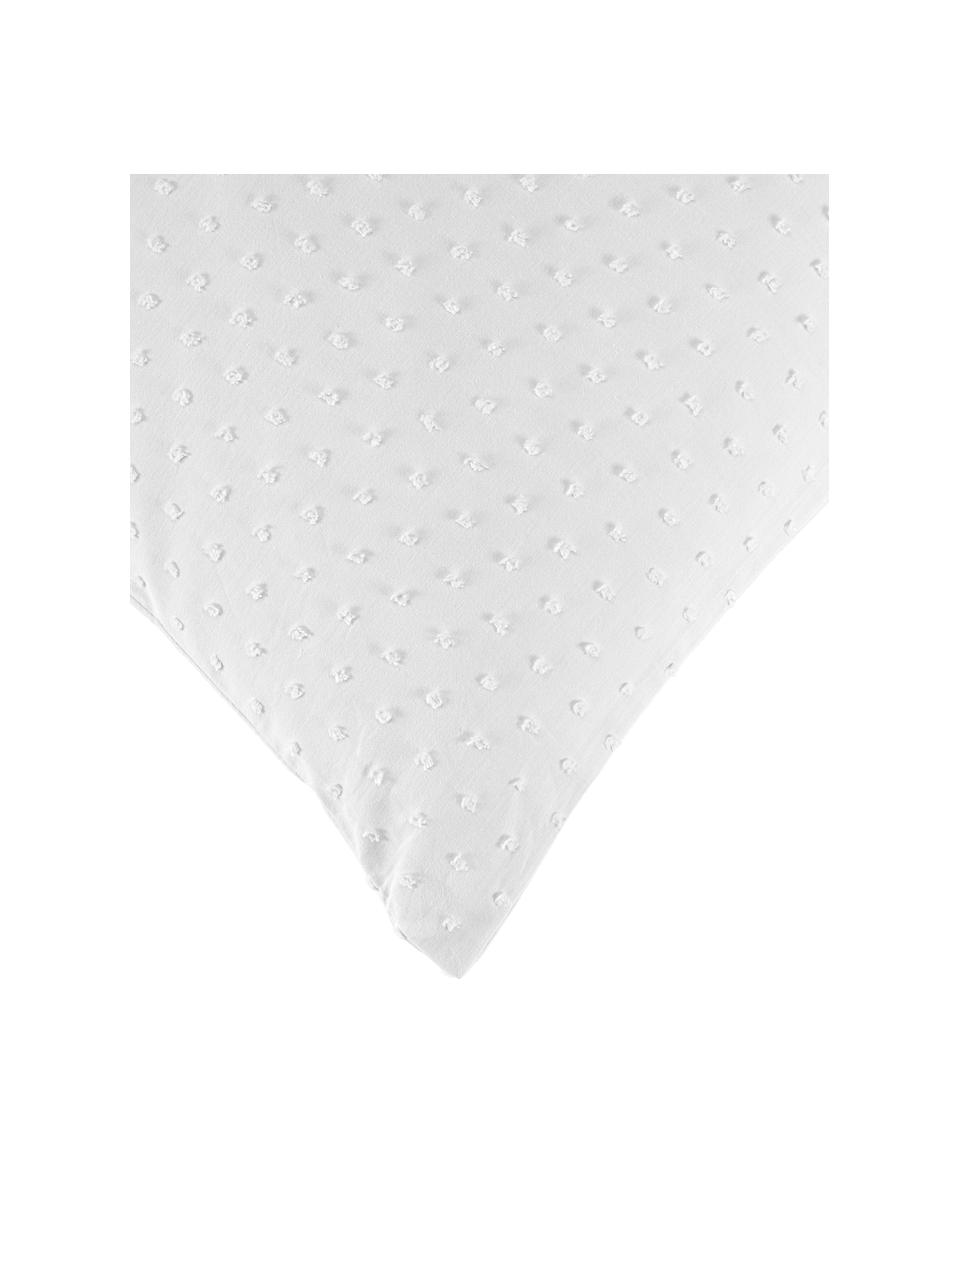 Copripiumino in tessuto Plumetti bianco Aloide, Bianco, Larg. 200 x Lung. 200 cm